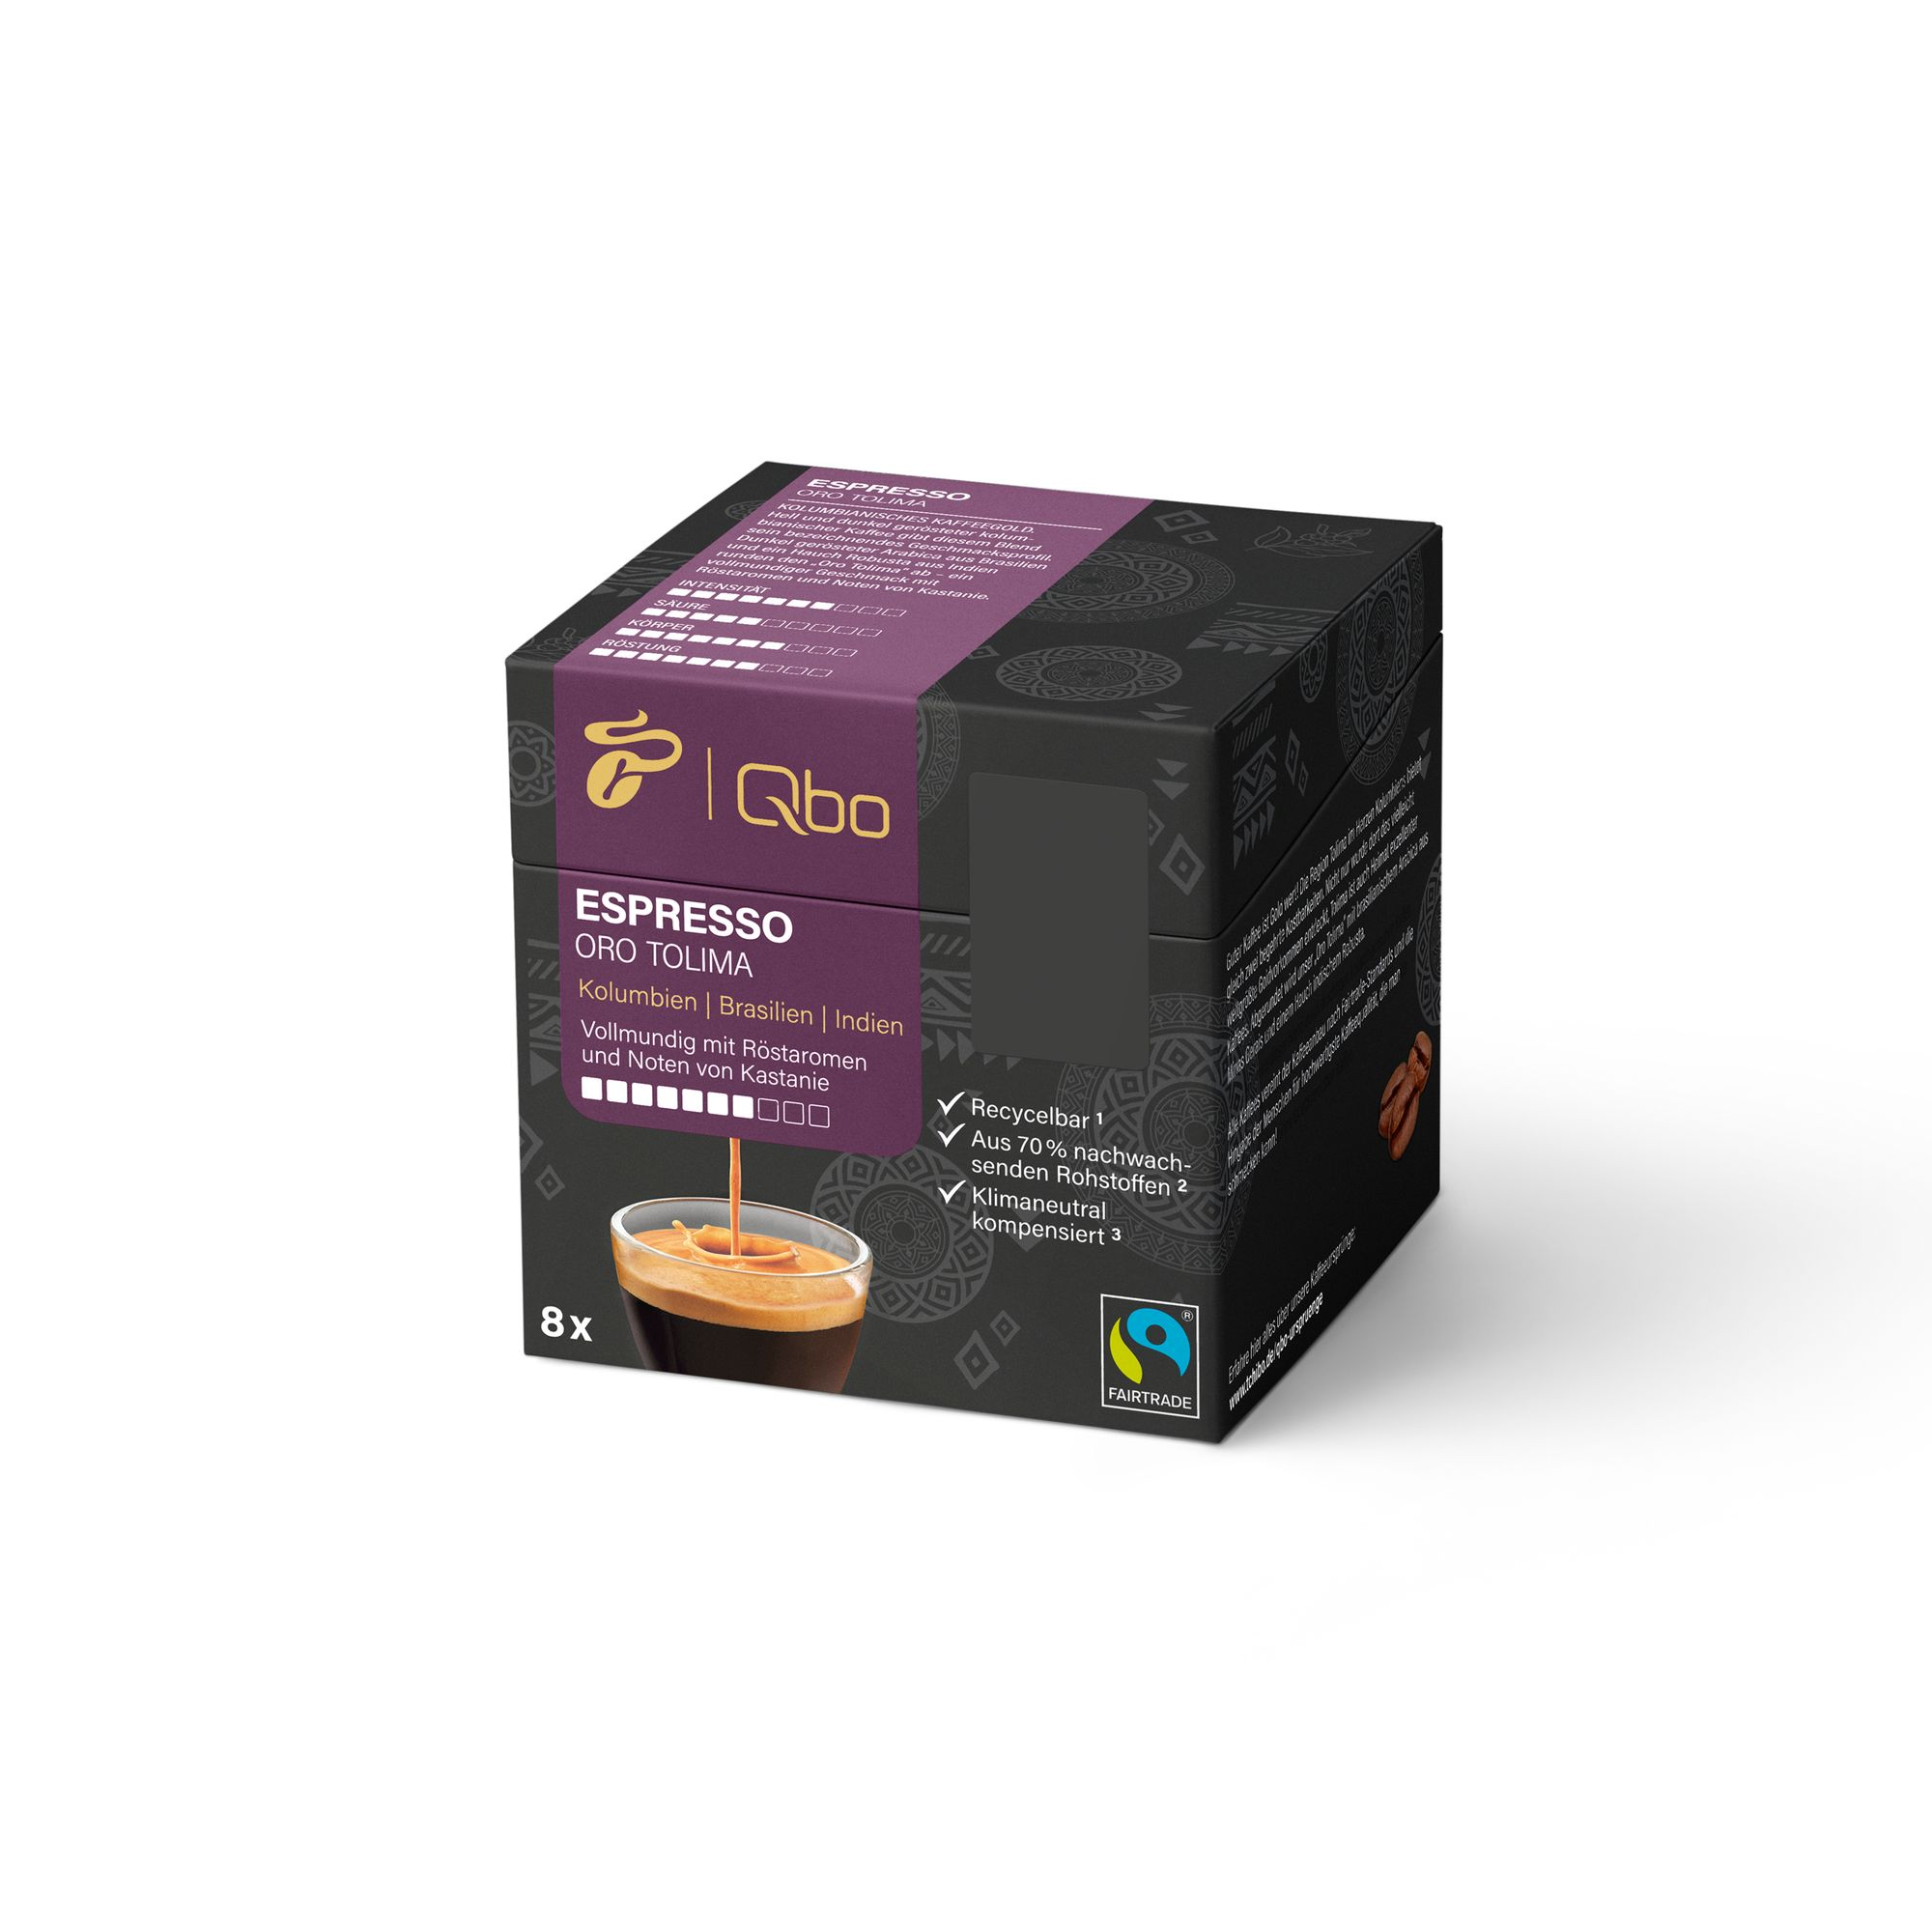 526012 (Tchibo Oro Kaffeekapseln Kapselsystem) Espresso 8 Stück QBO Qbo TCHIBO Tolima